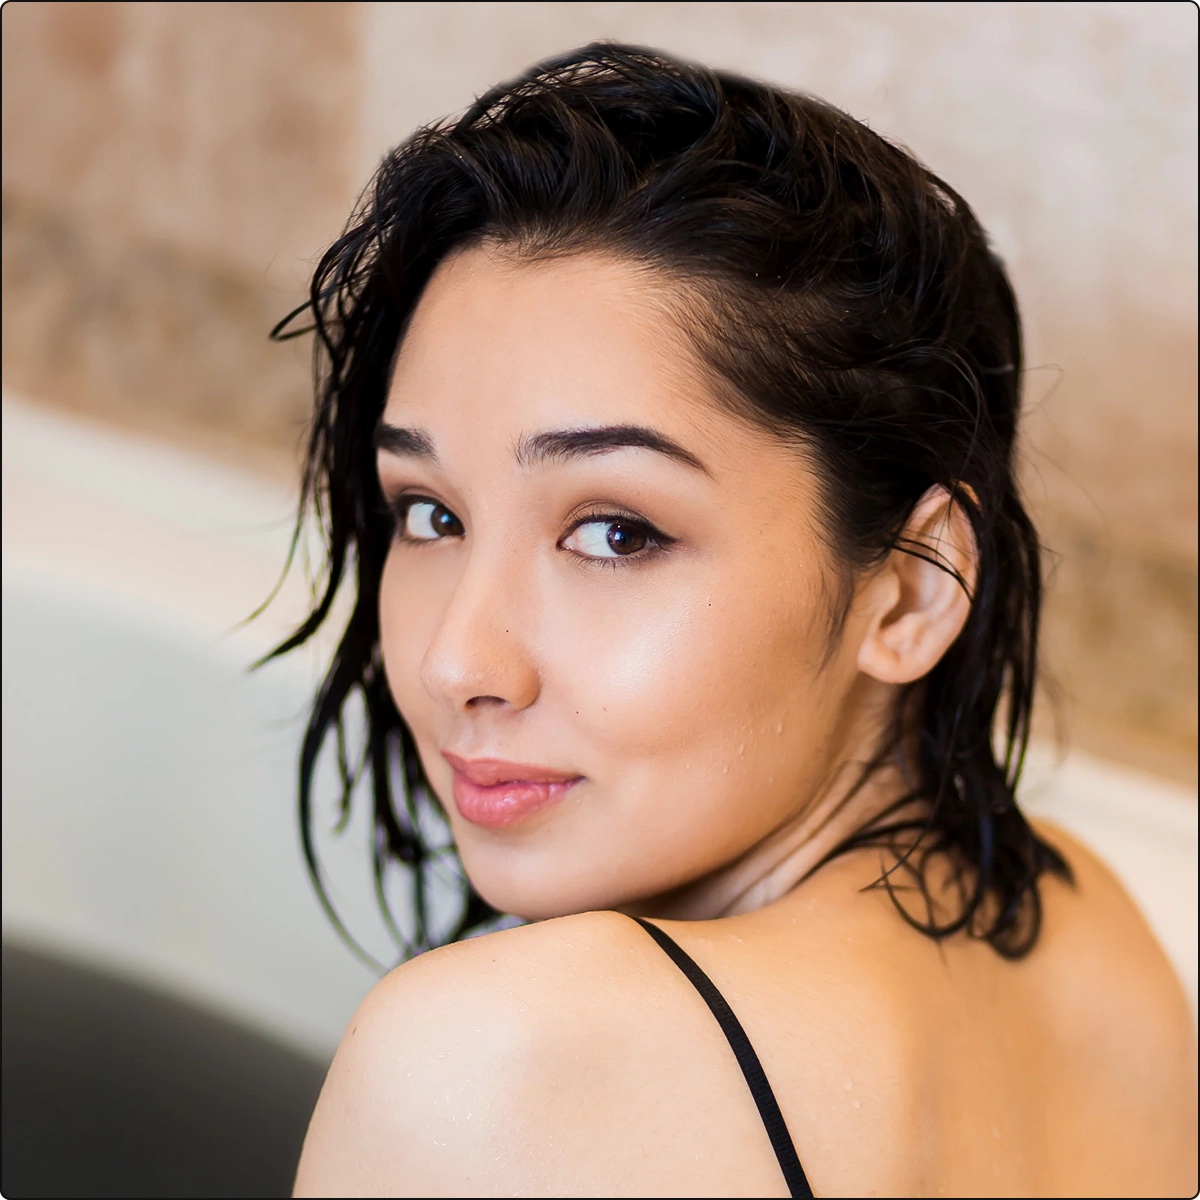 beautiful woman sitting in bathtub wearing black lingerie looking back at camera